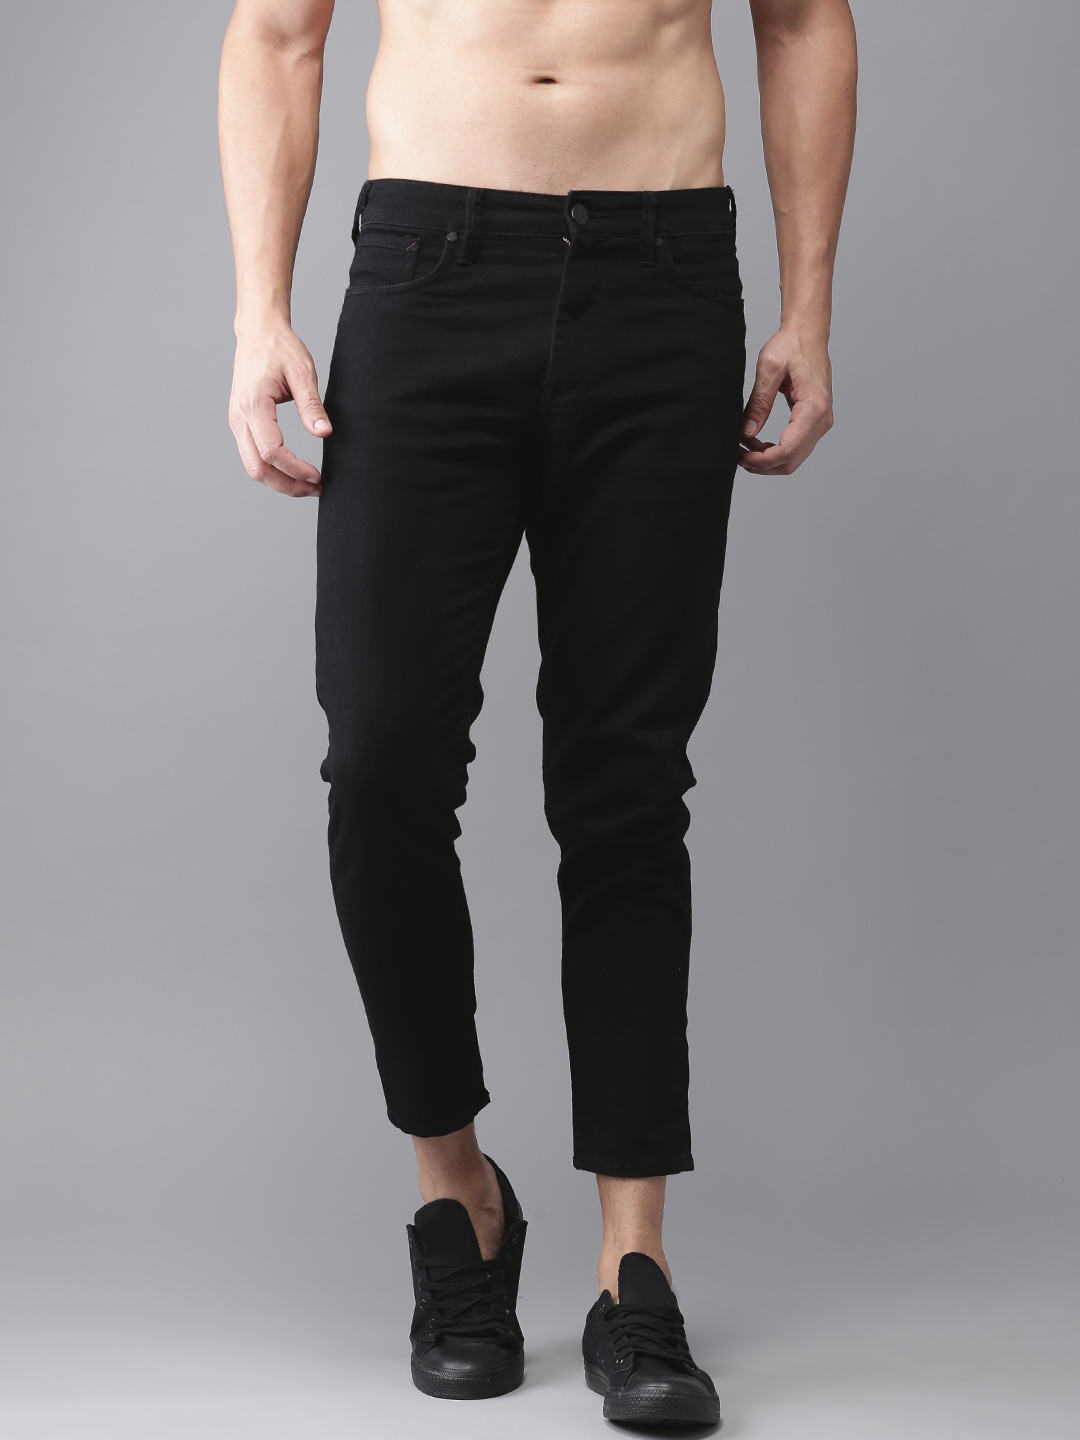 Buy Moda Rapido Men Ankle Length Slim Fit Black Stretchable Jeans - Jeans  for Men 1894946